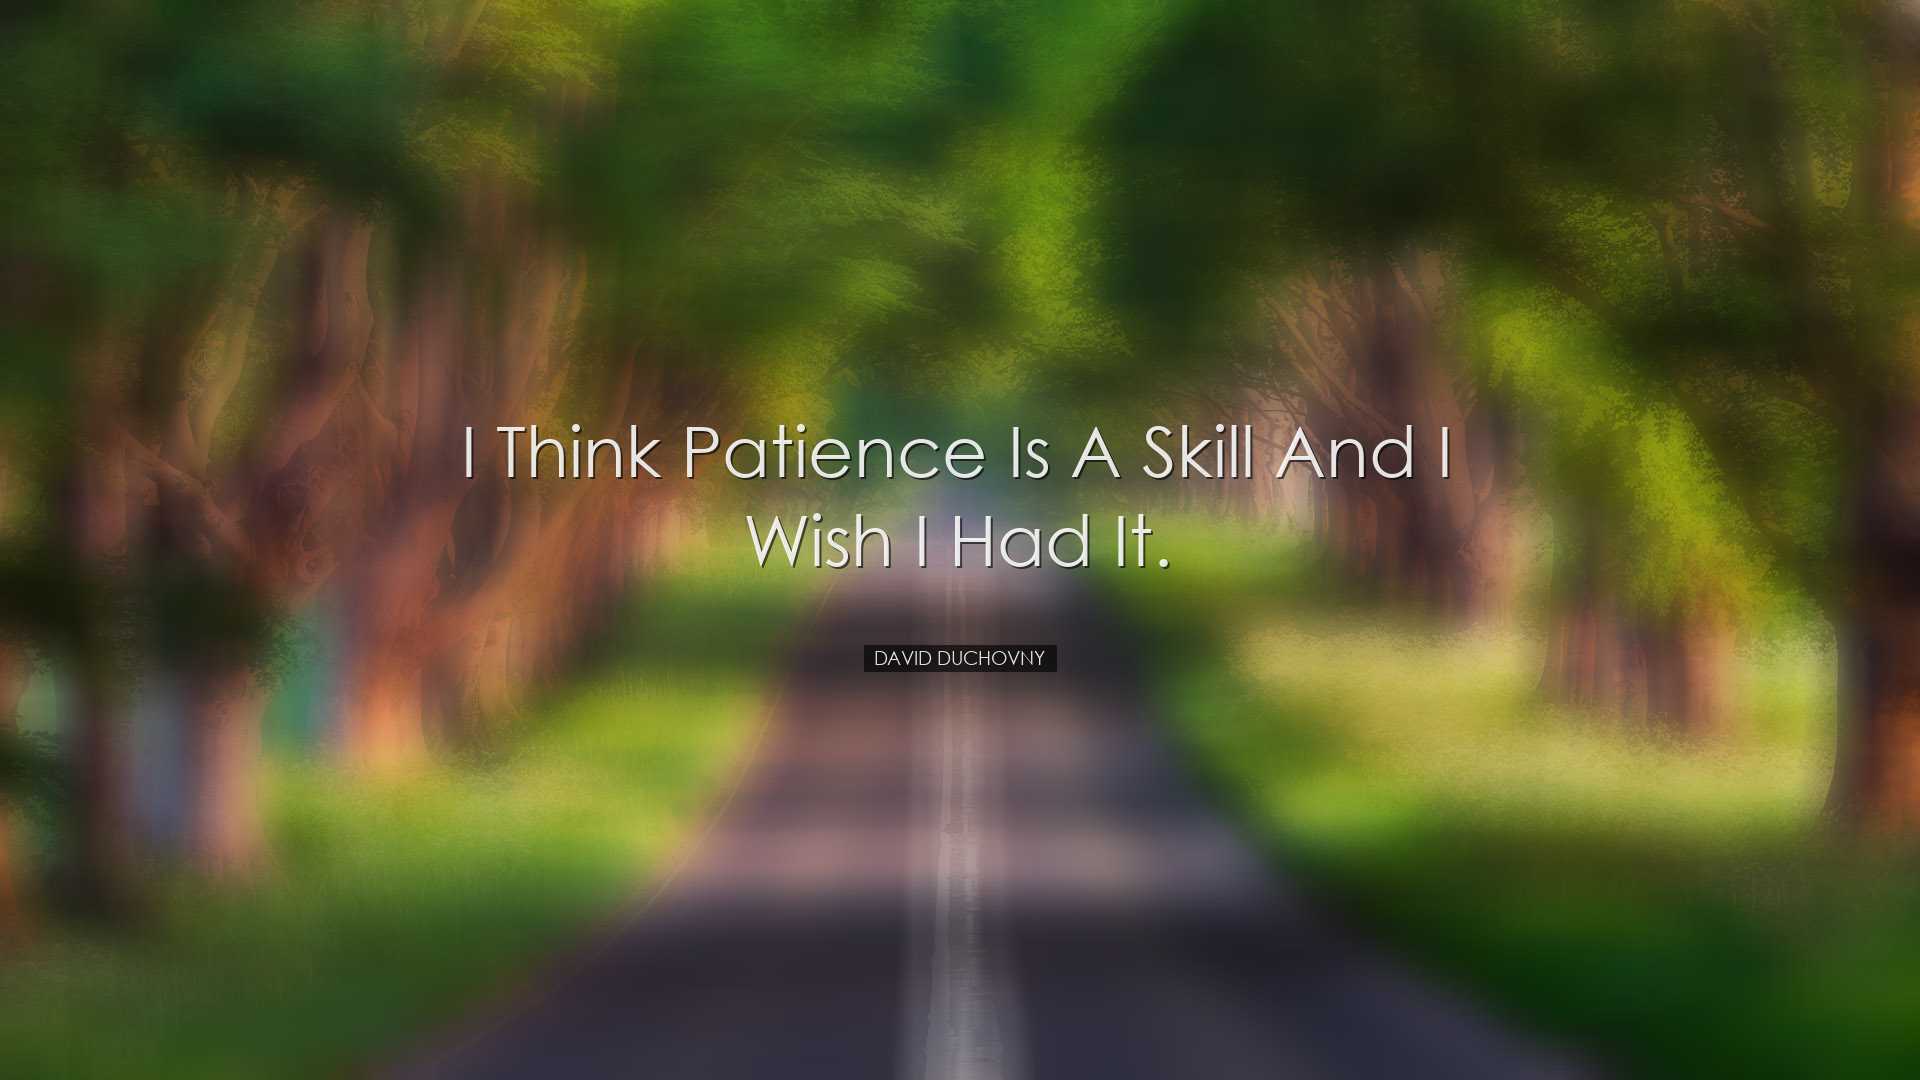 I think patience is a skill and I wish I had it. - David Duchovny